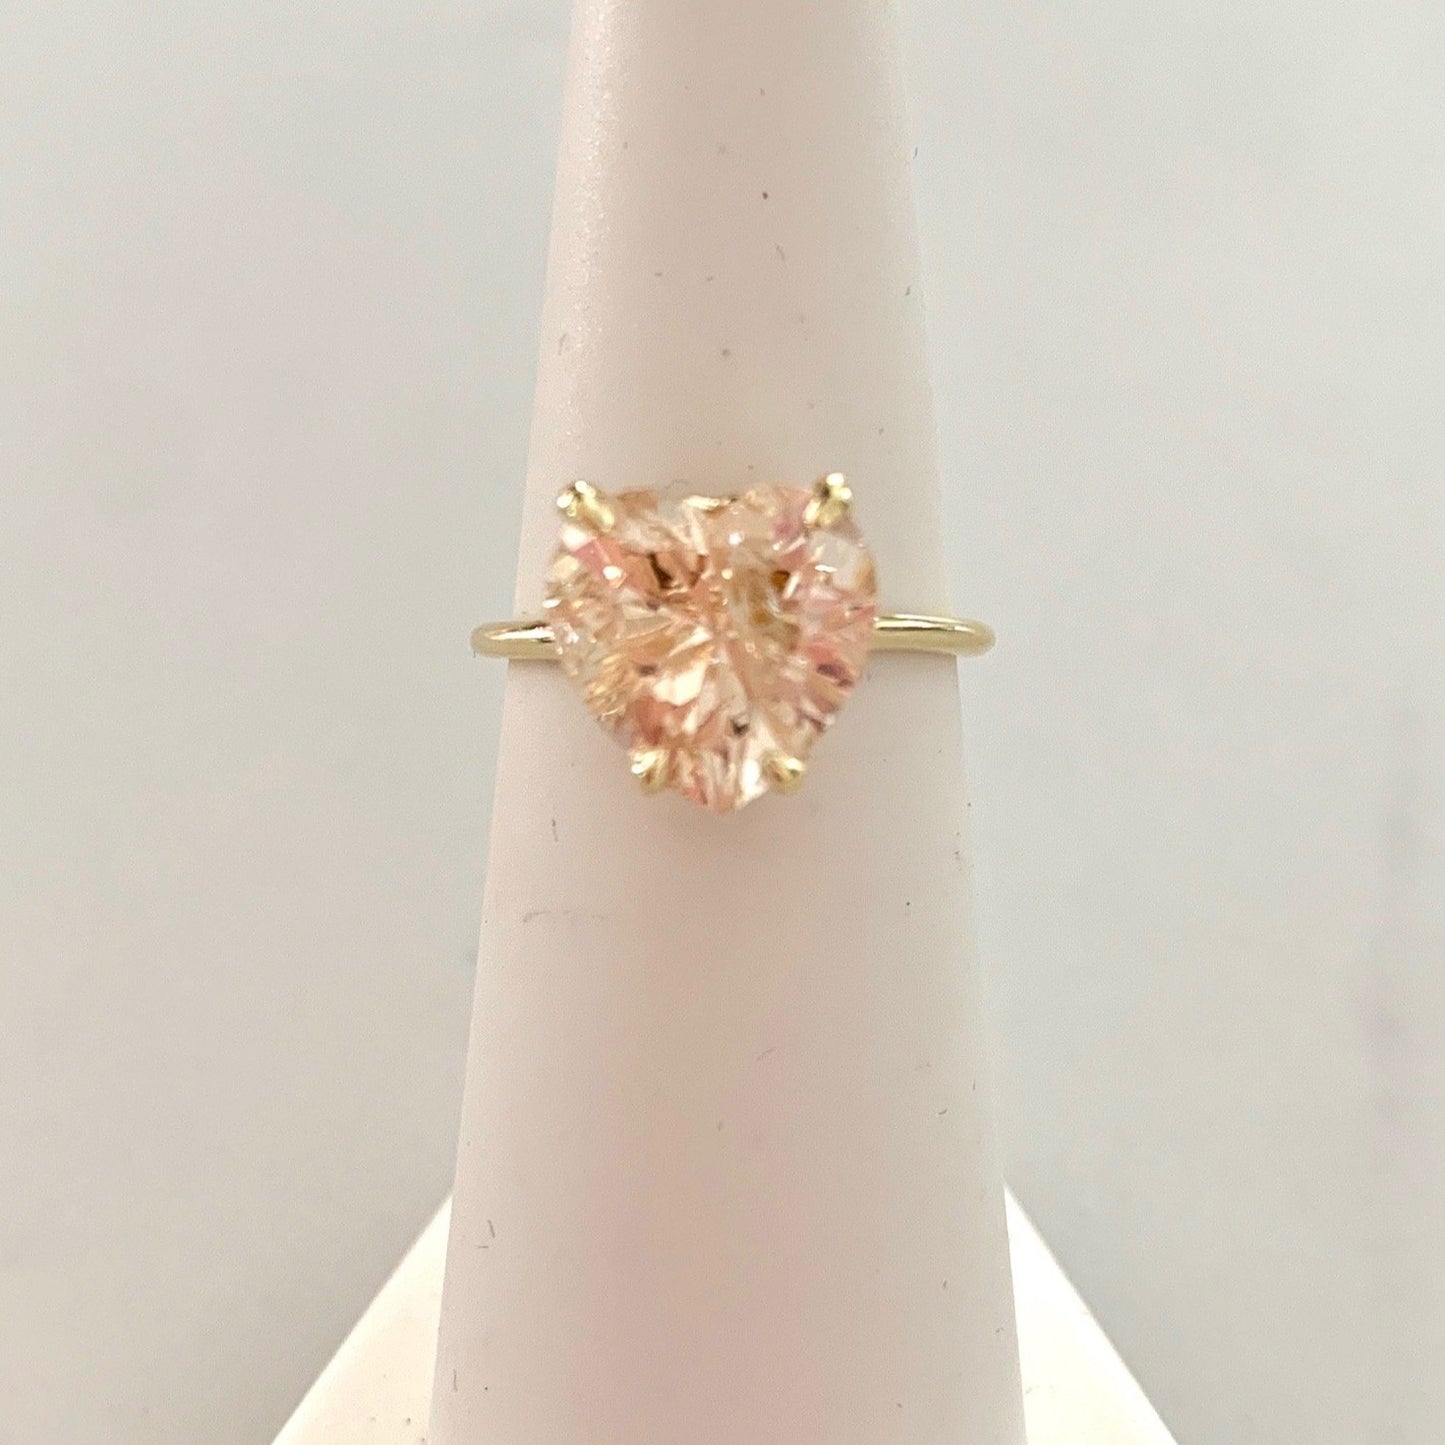 Heart of Stone- Champagne Diamond Ring